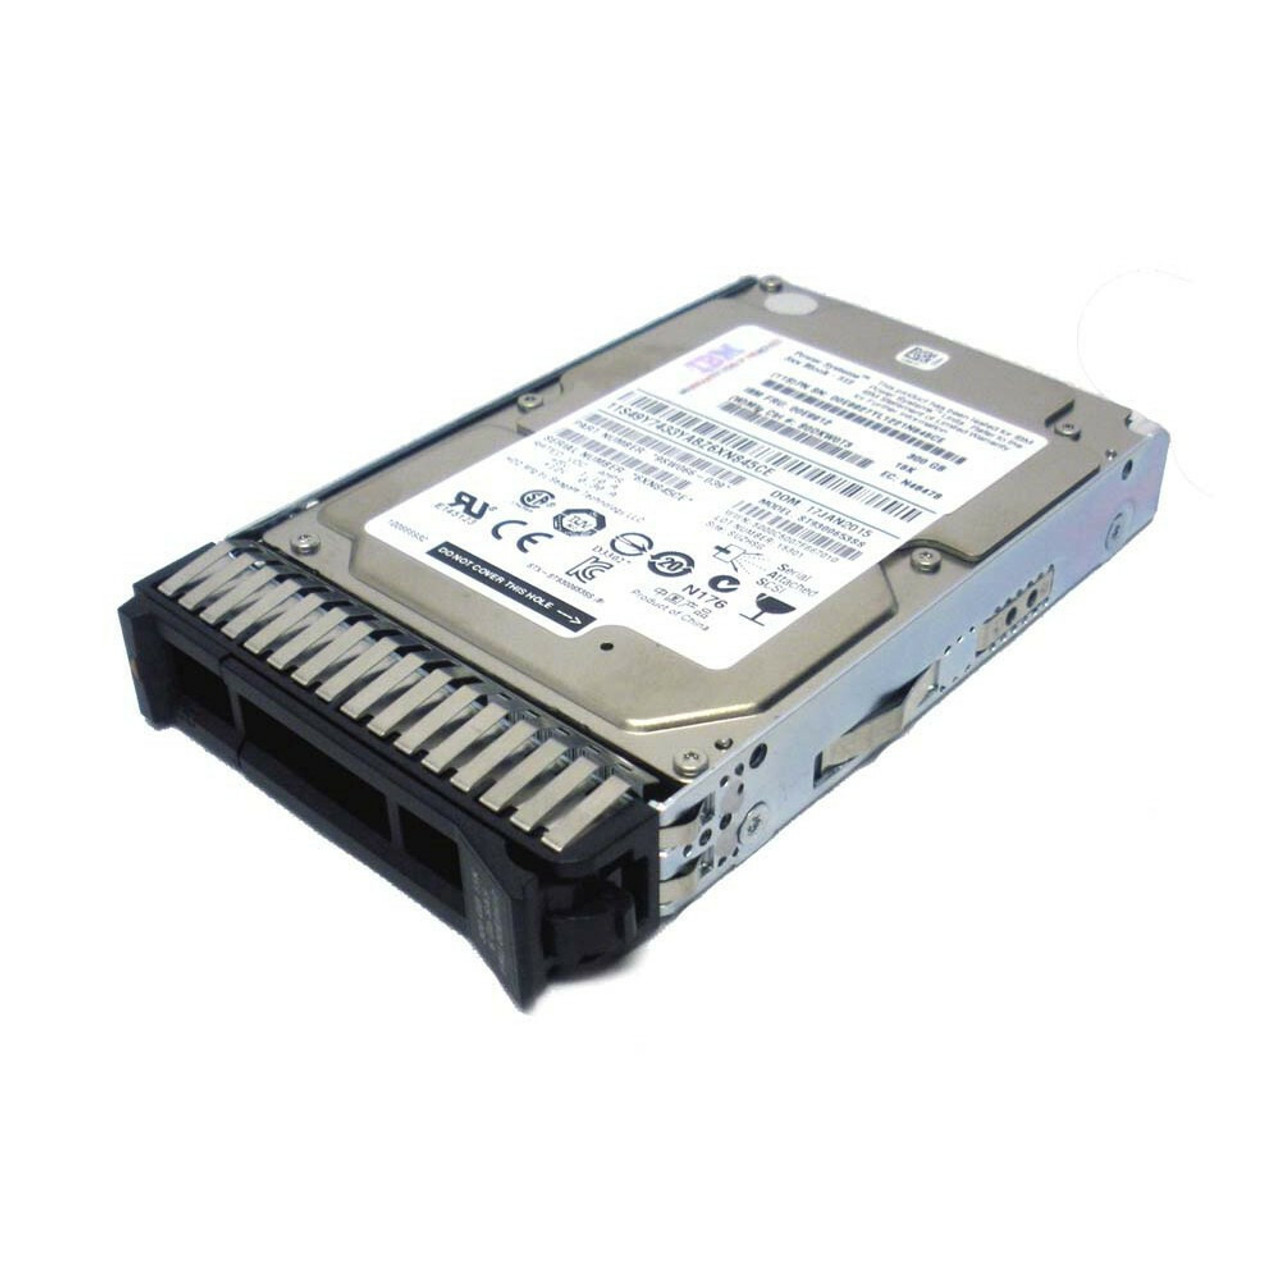 IBM iSeries S814 Server Spare Parts